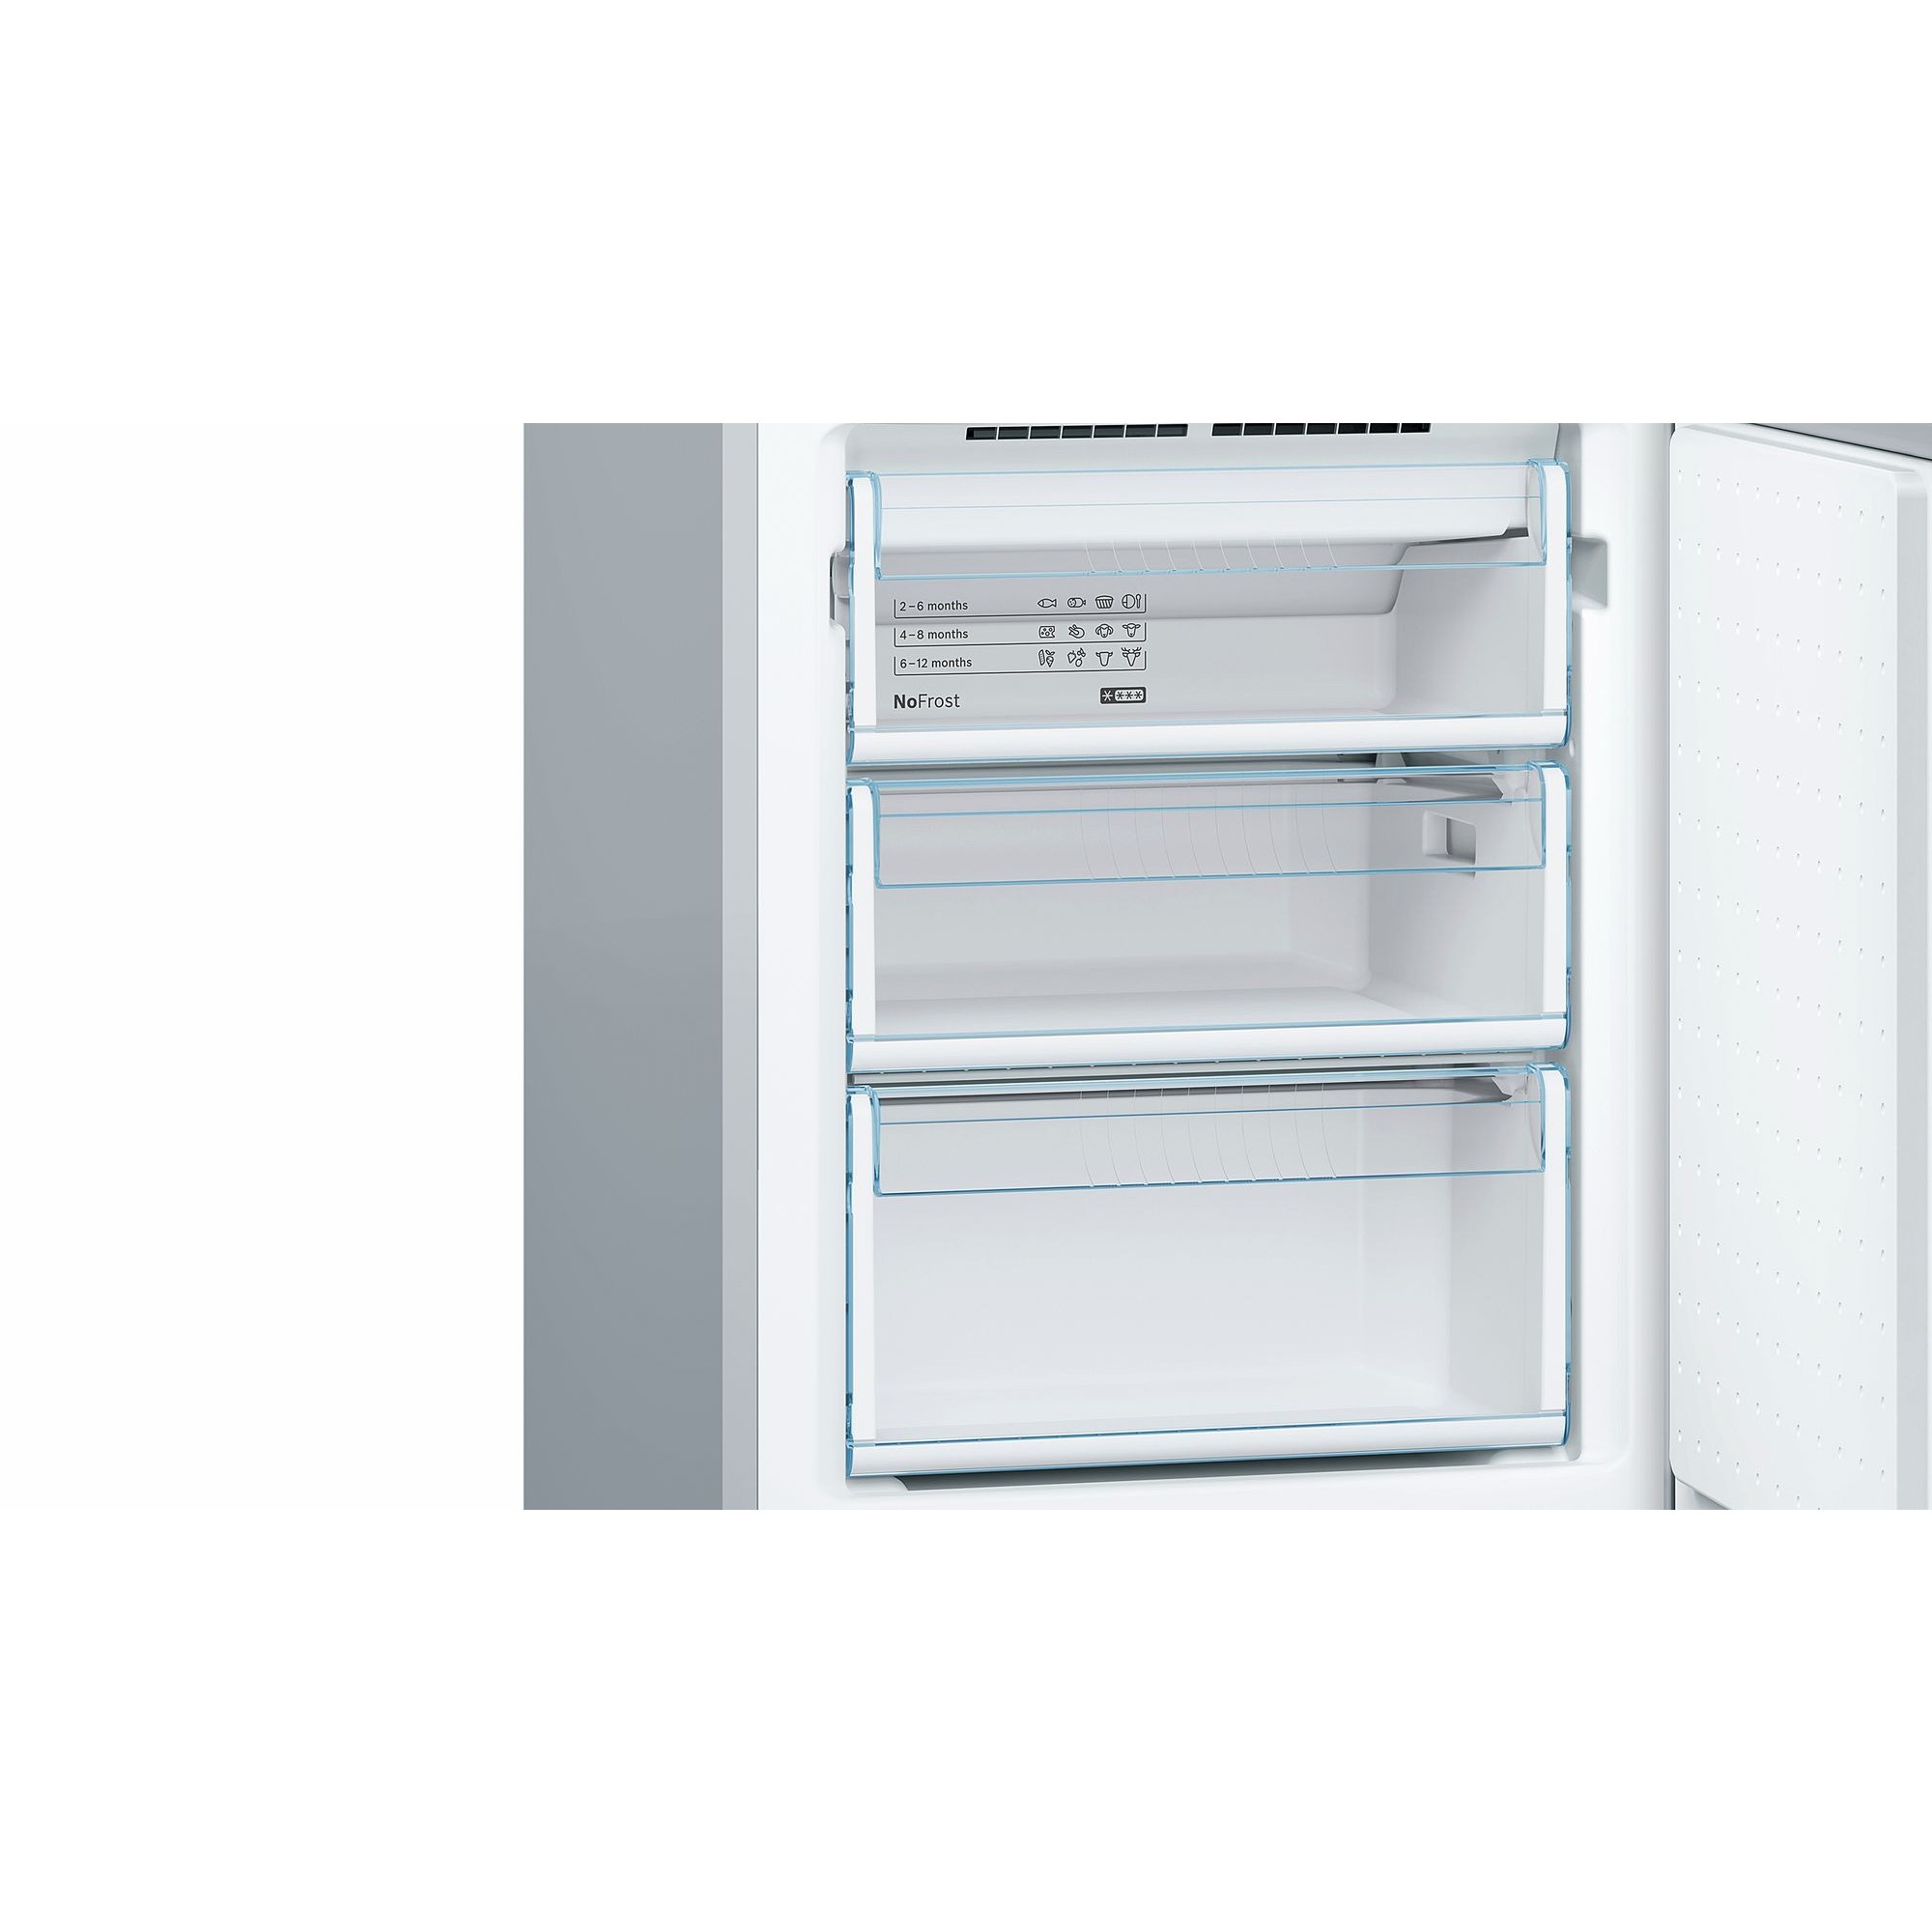 Hotpoint ariston hts 7200 mx. Холодильник Bosch kgn36nw14r, белый. Kgn36nl13r/01. ATLANT хм-4623-149 ND. Холодильник Hotpoint-Ariston HTS 7200 MX o3 серебристый.